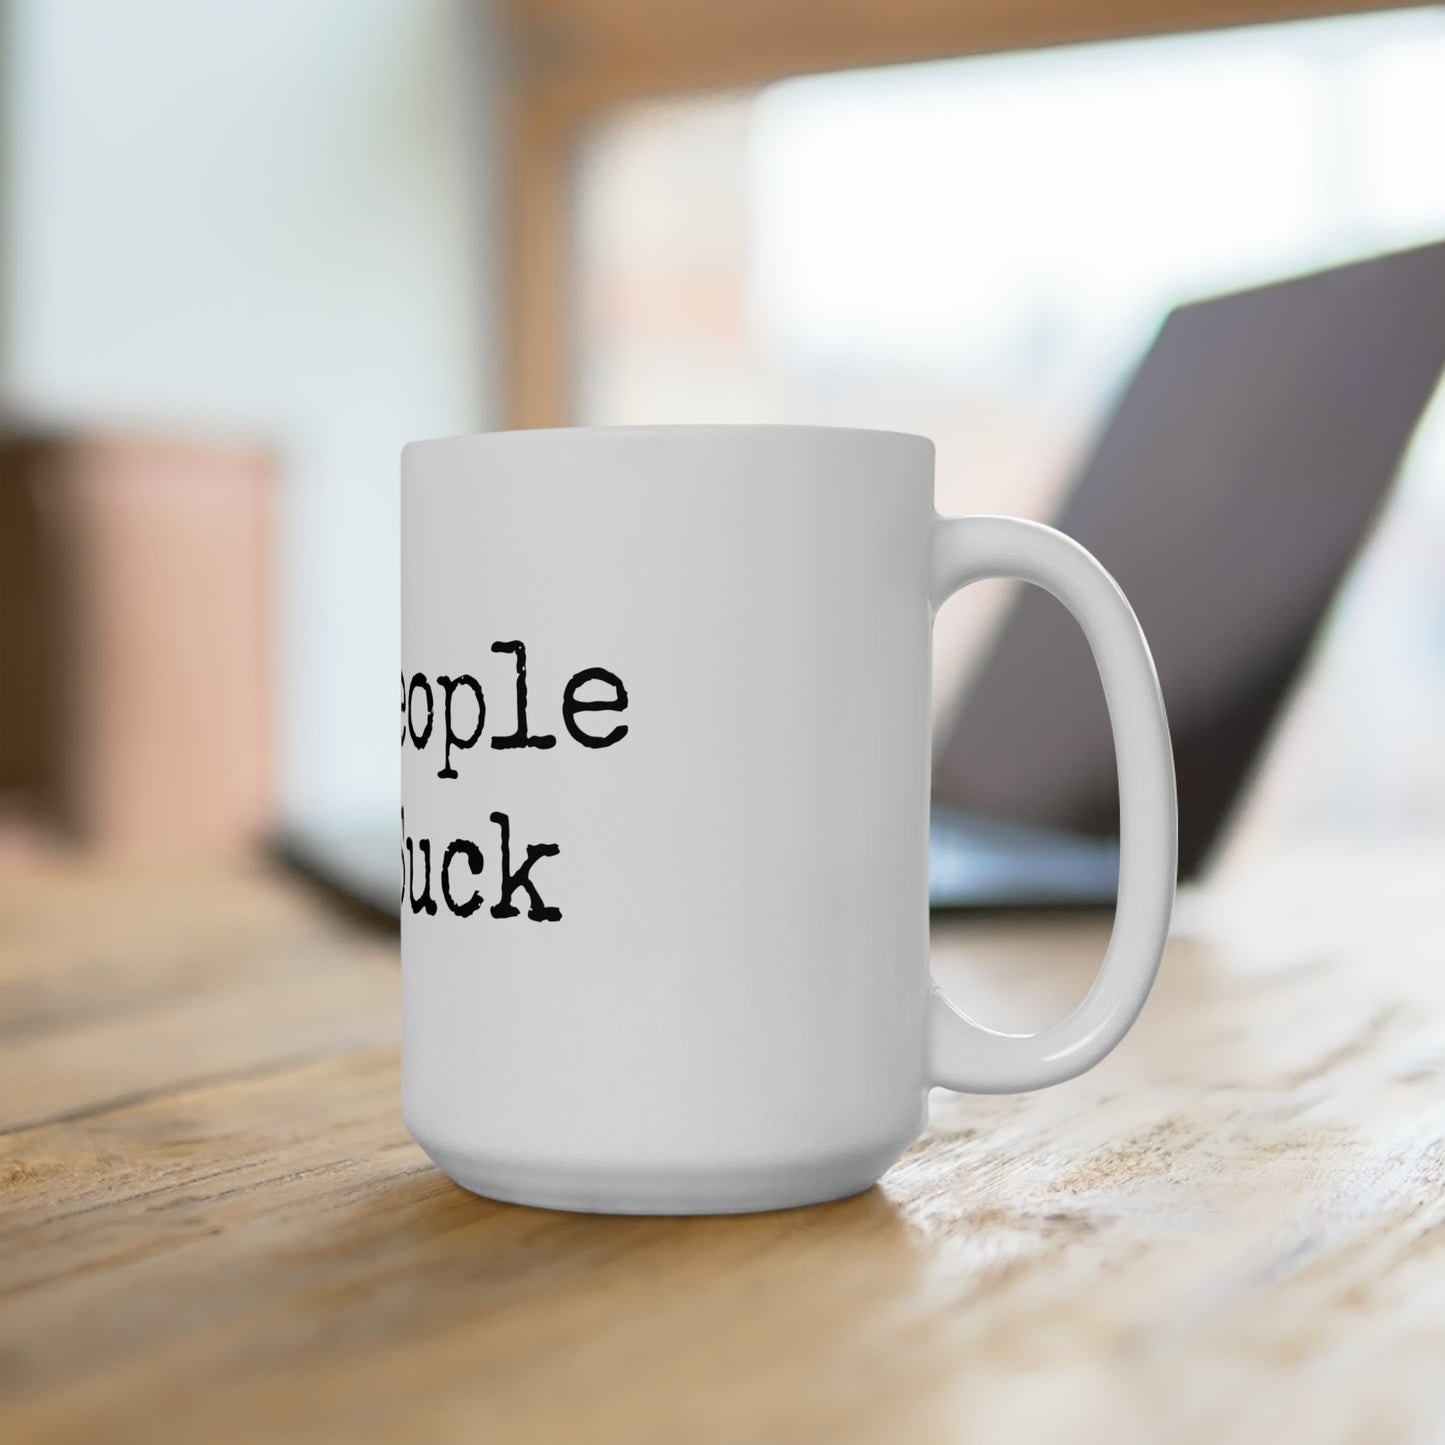 Coffee Mug - "People Suck"